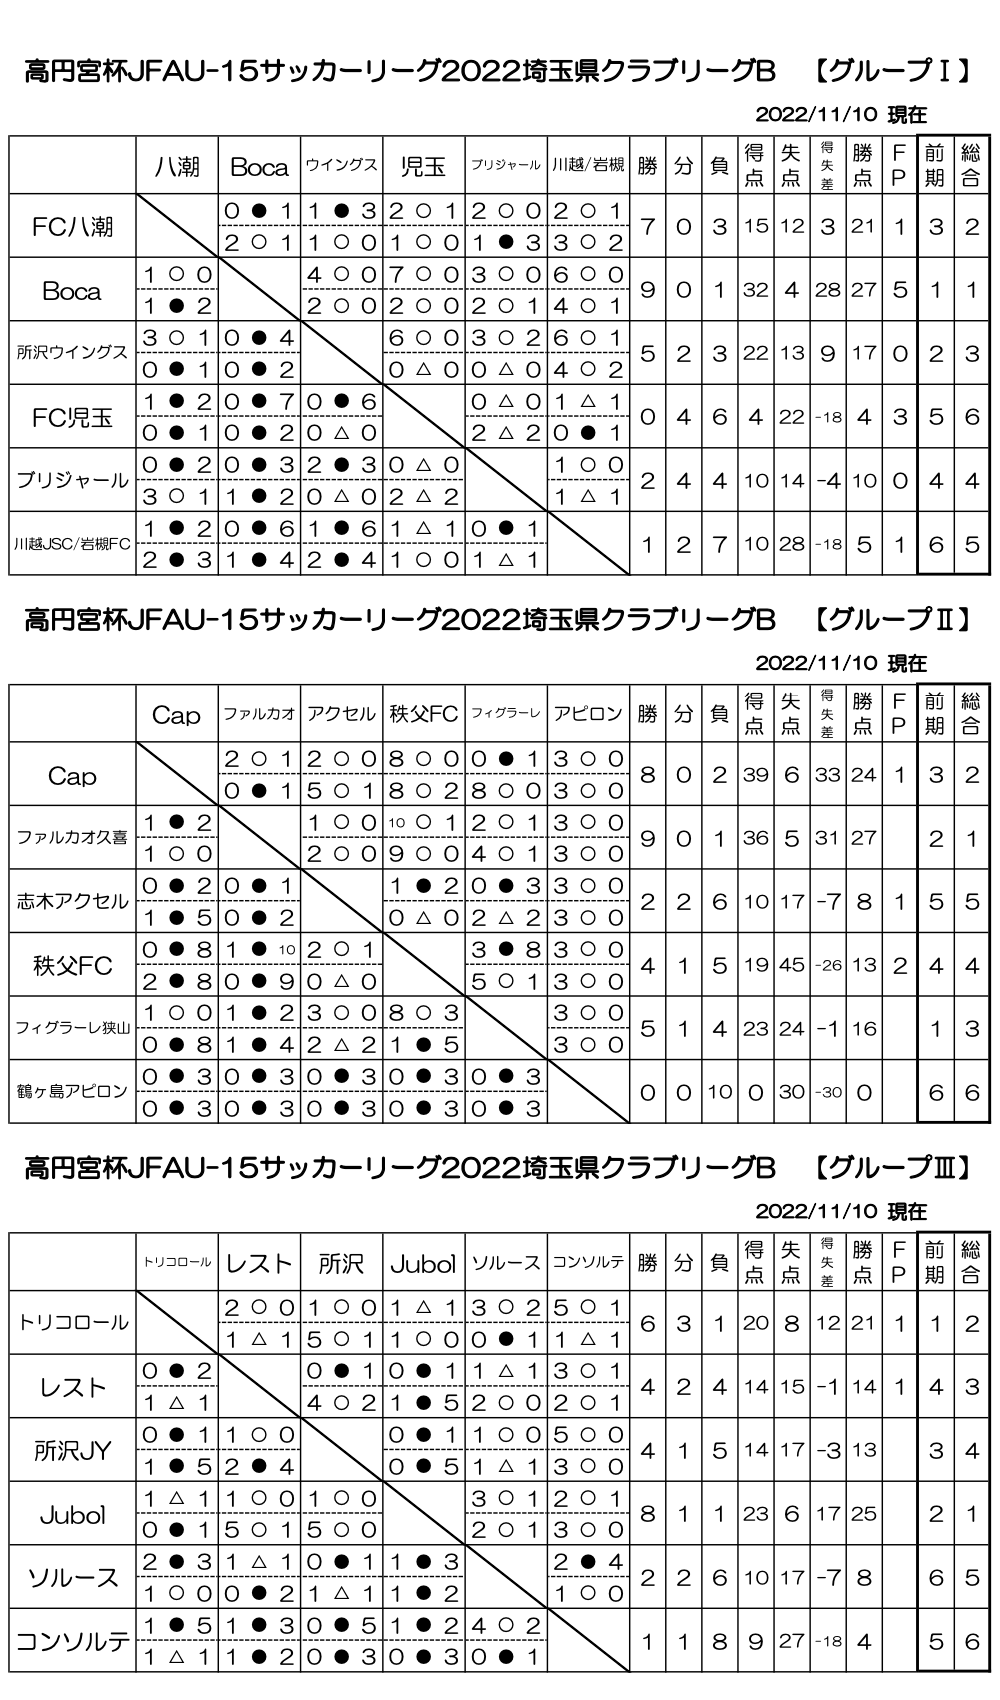 2022 JFA埼玉県クラブリーグ(U-15) 星取表 11.10 Bグループ